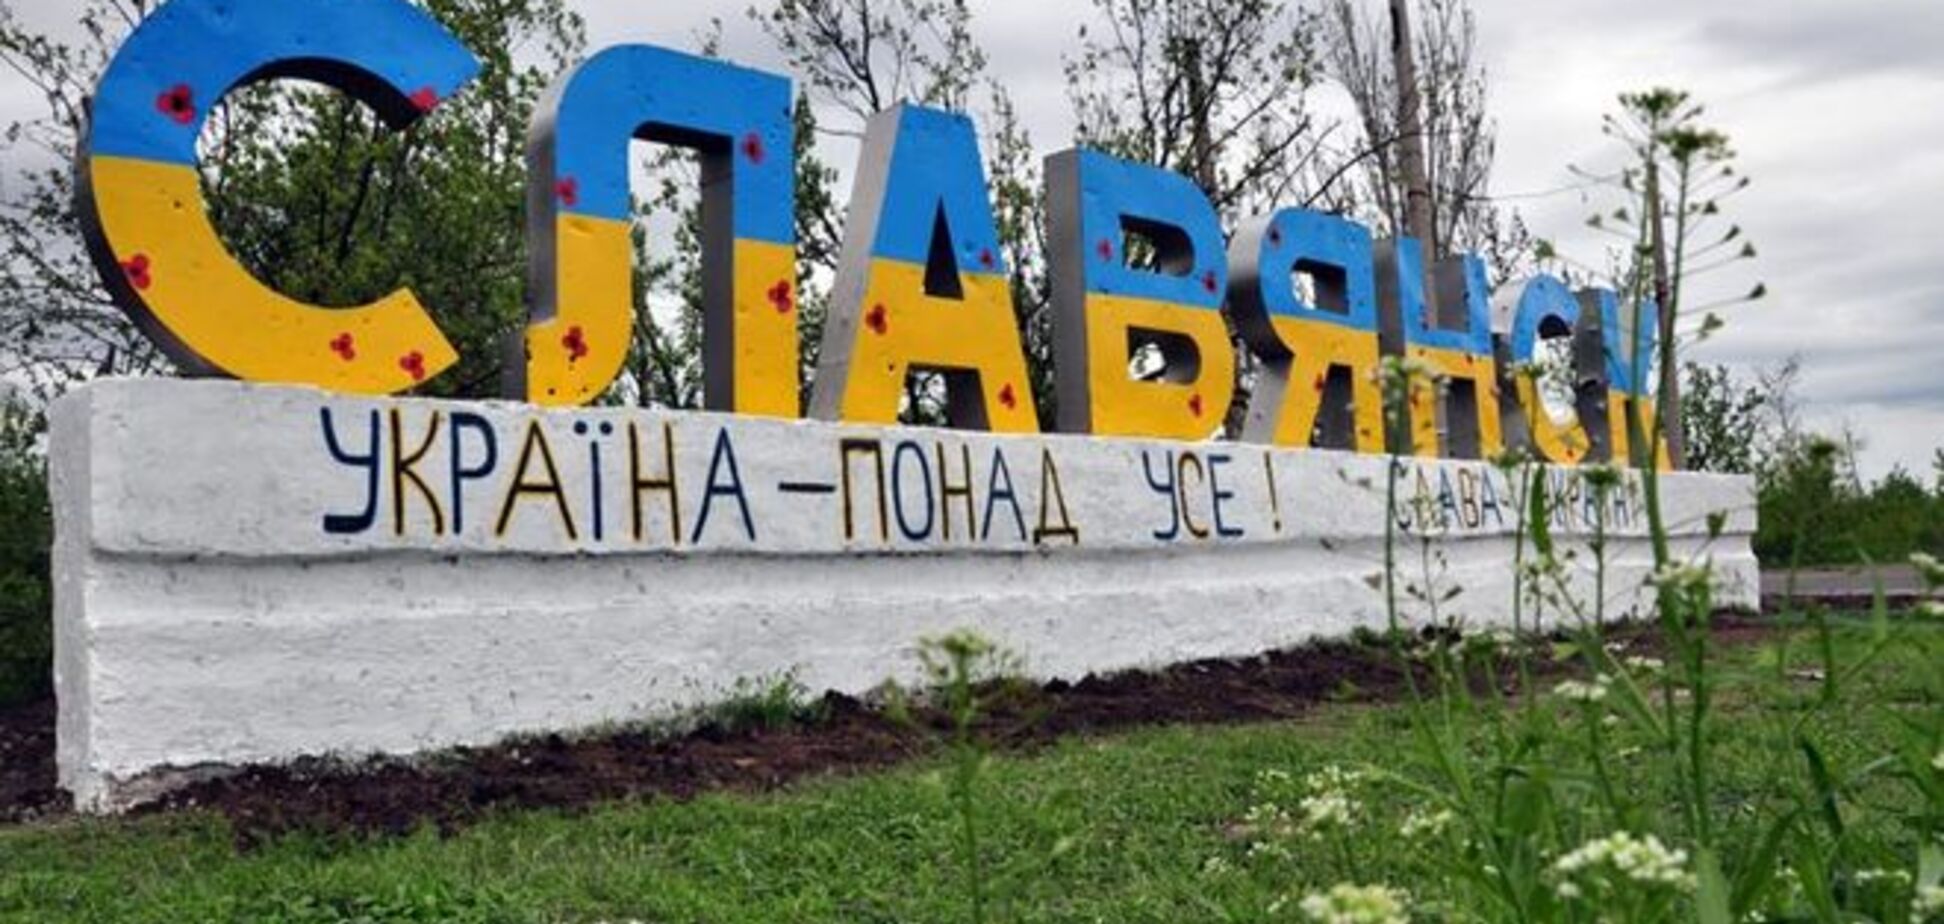 Стала патриотической: на въезде в Славянск активисты восстановили стелу